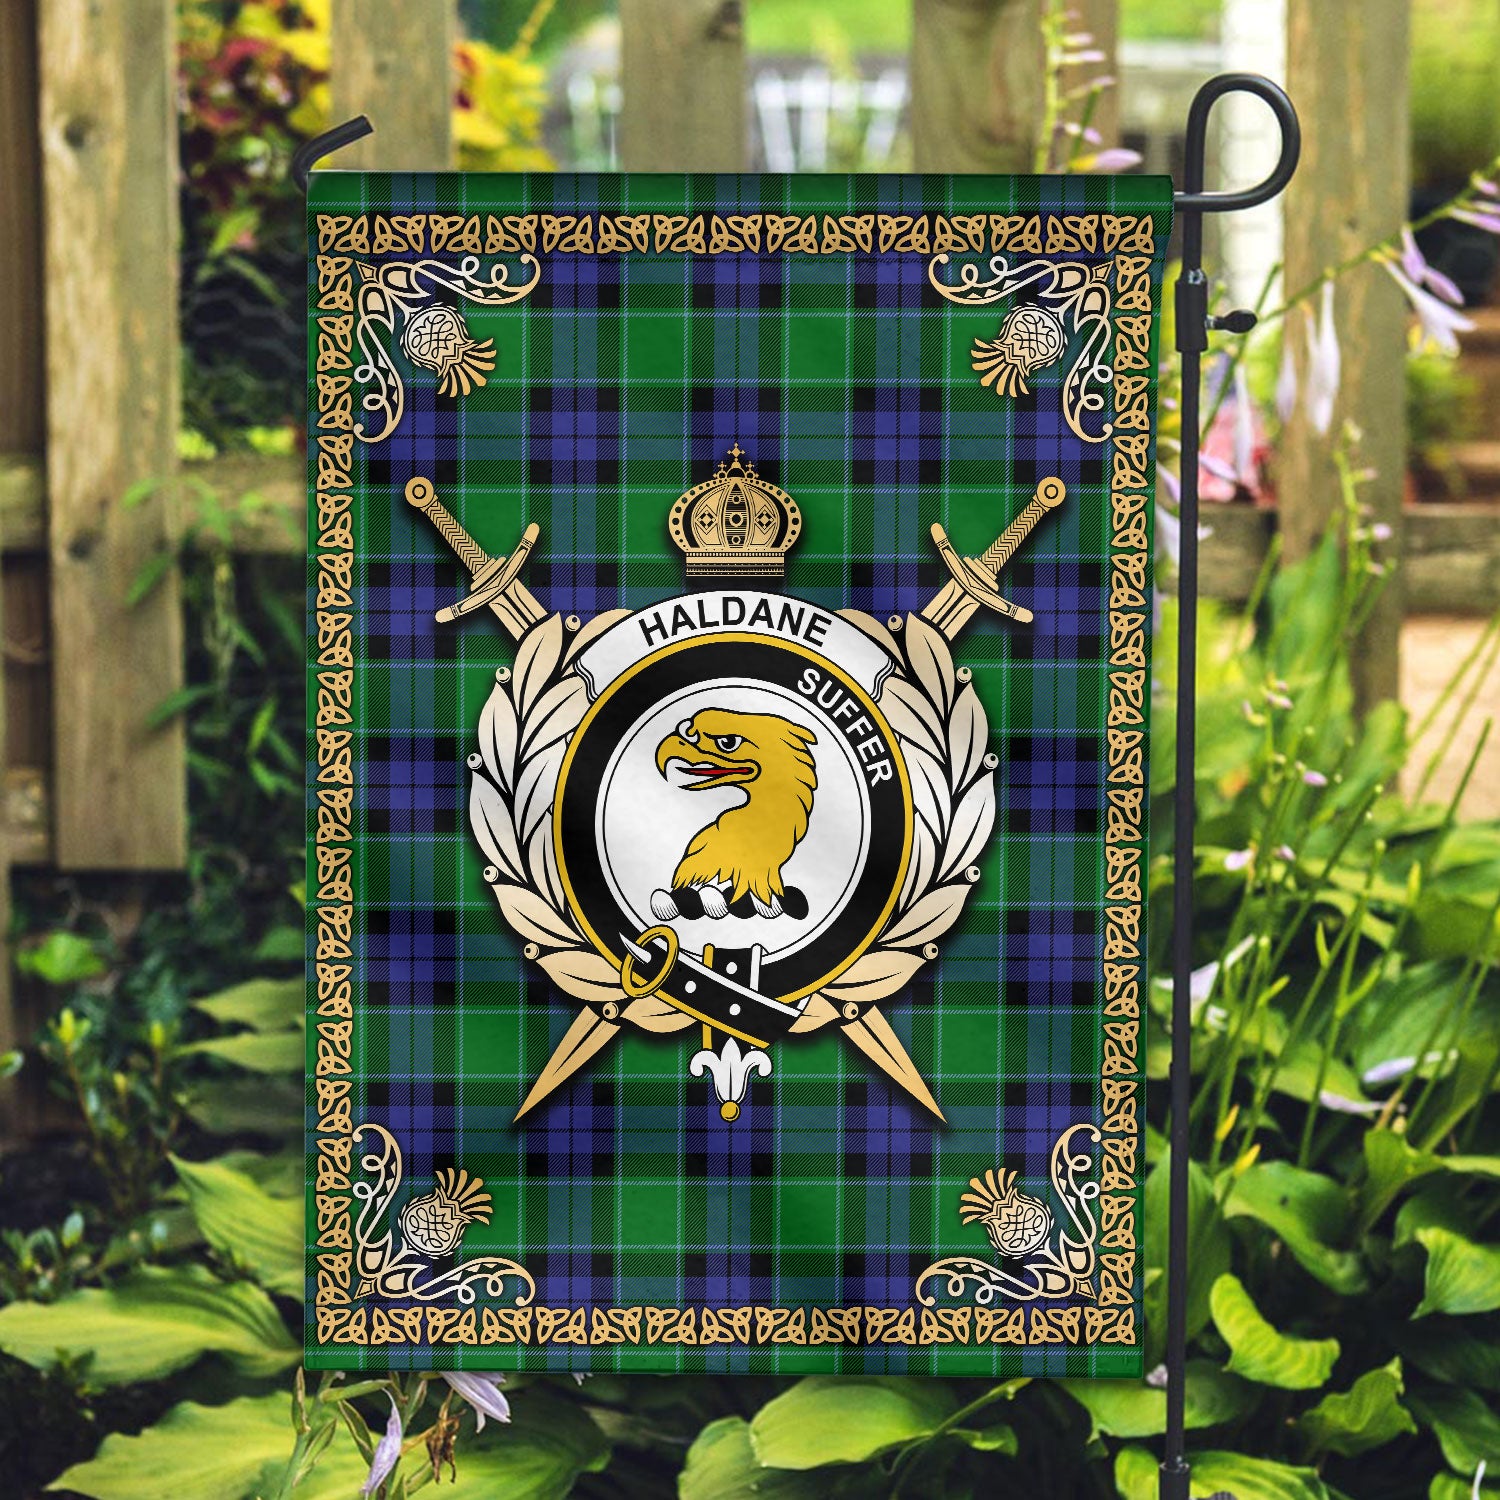 Haldane Tartan Crest Garden Flag - Celtic Thistle Style